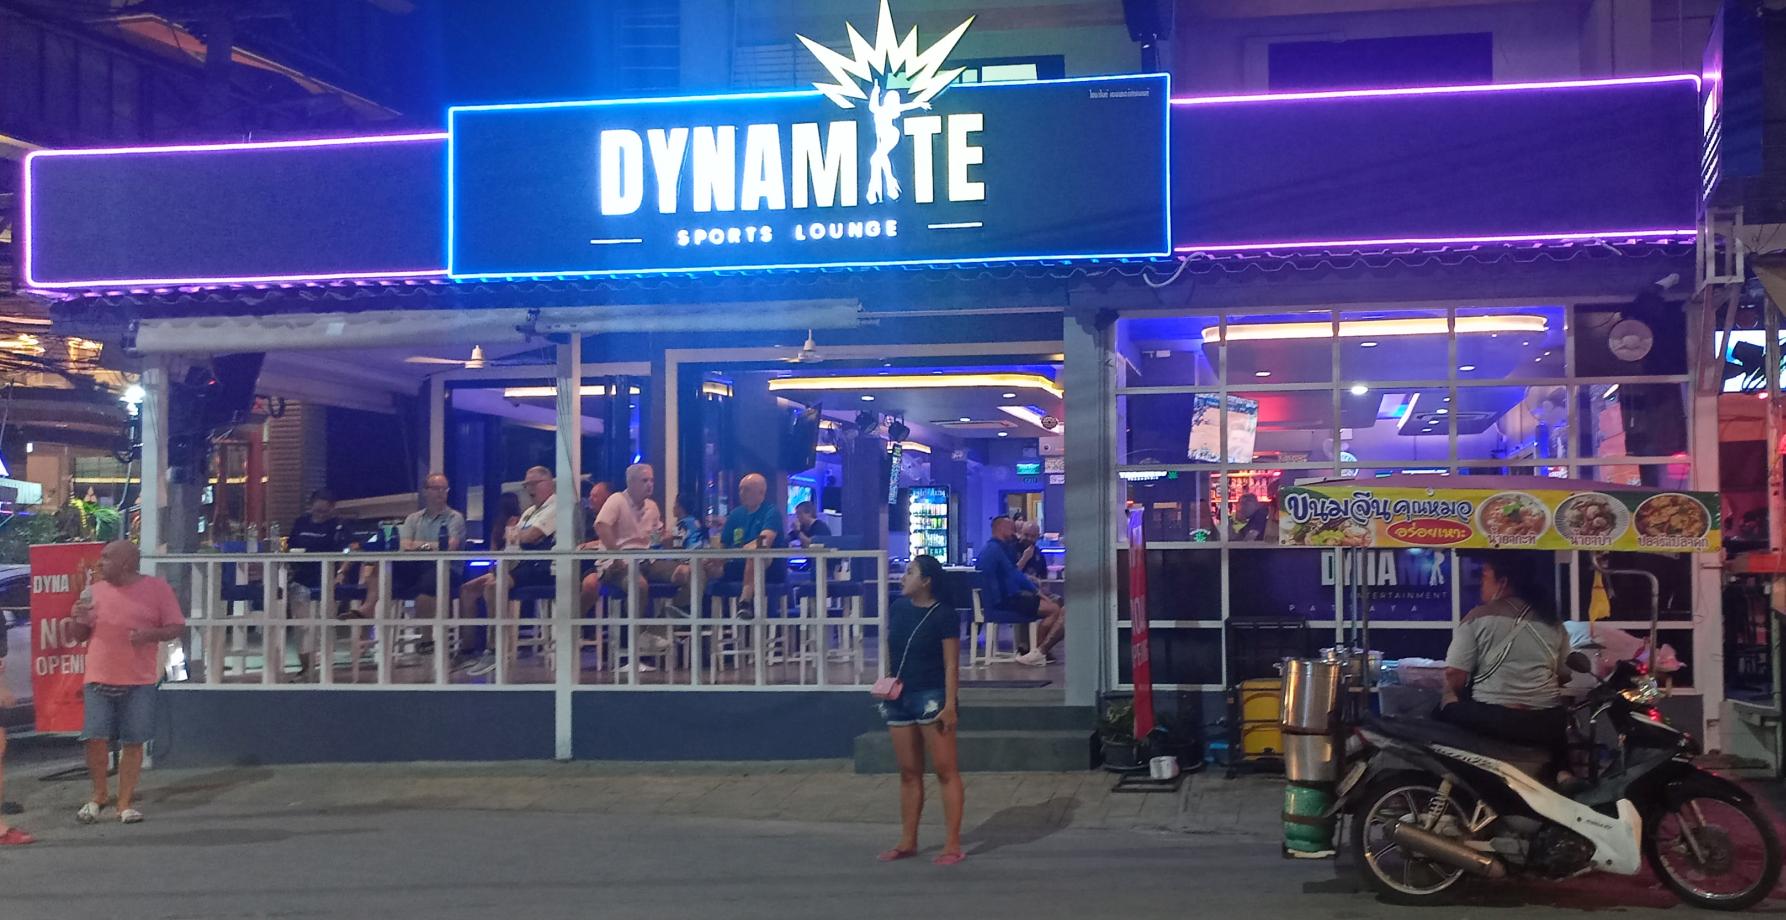 Dynamite Sports Lounge & Restaurant, Soi Buakhao Pattaya